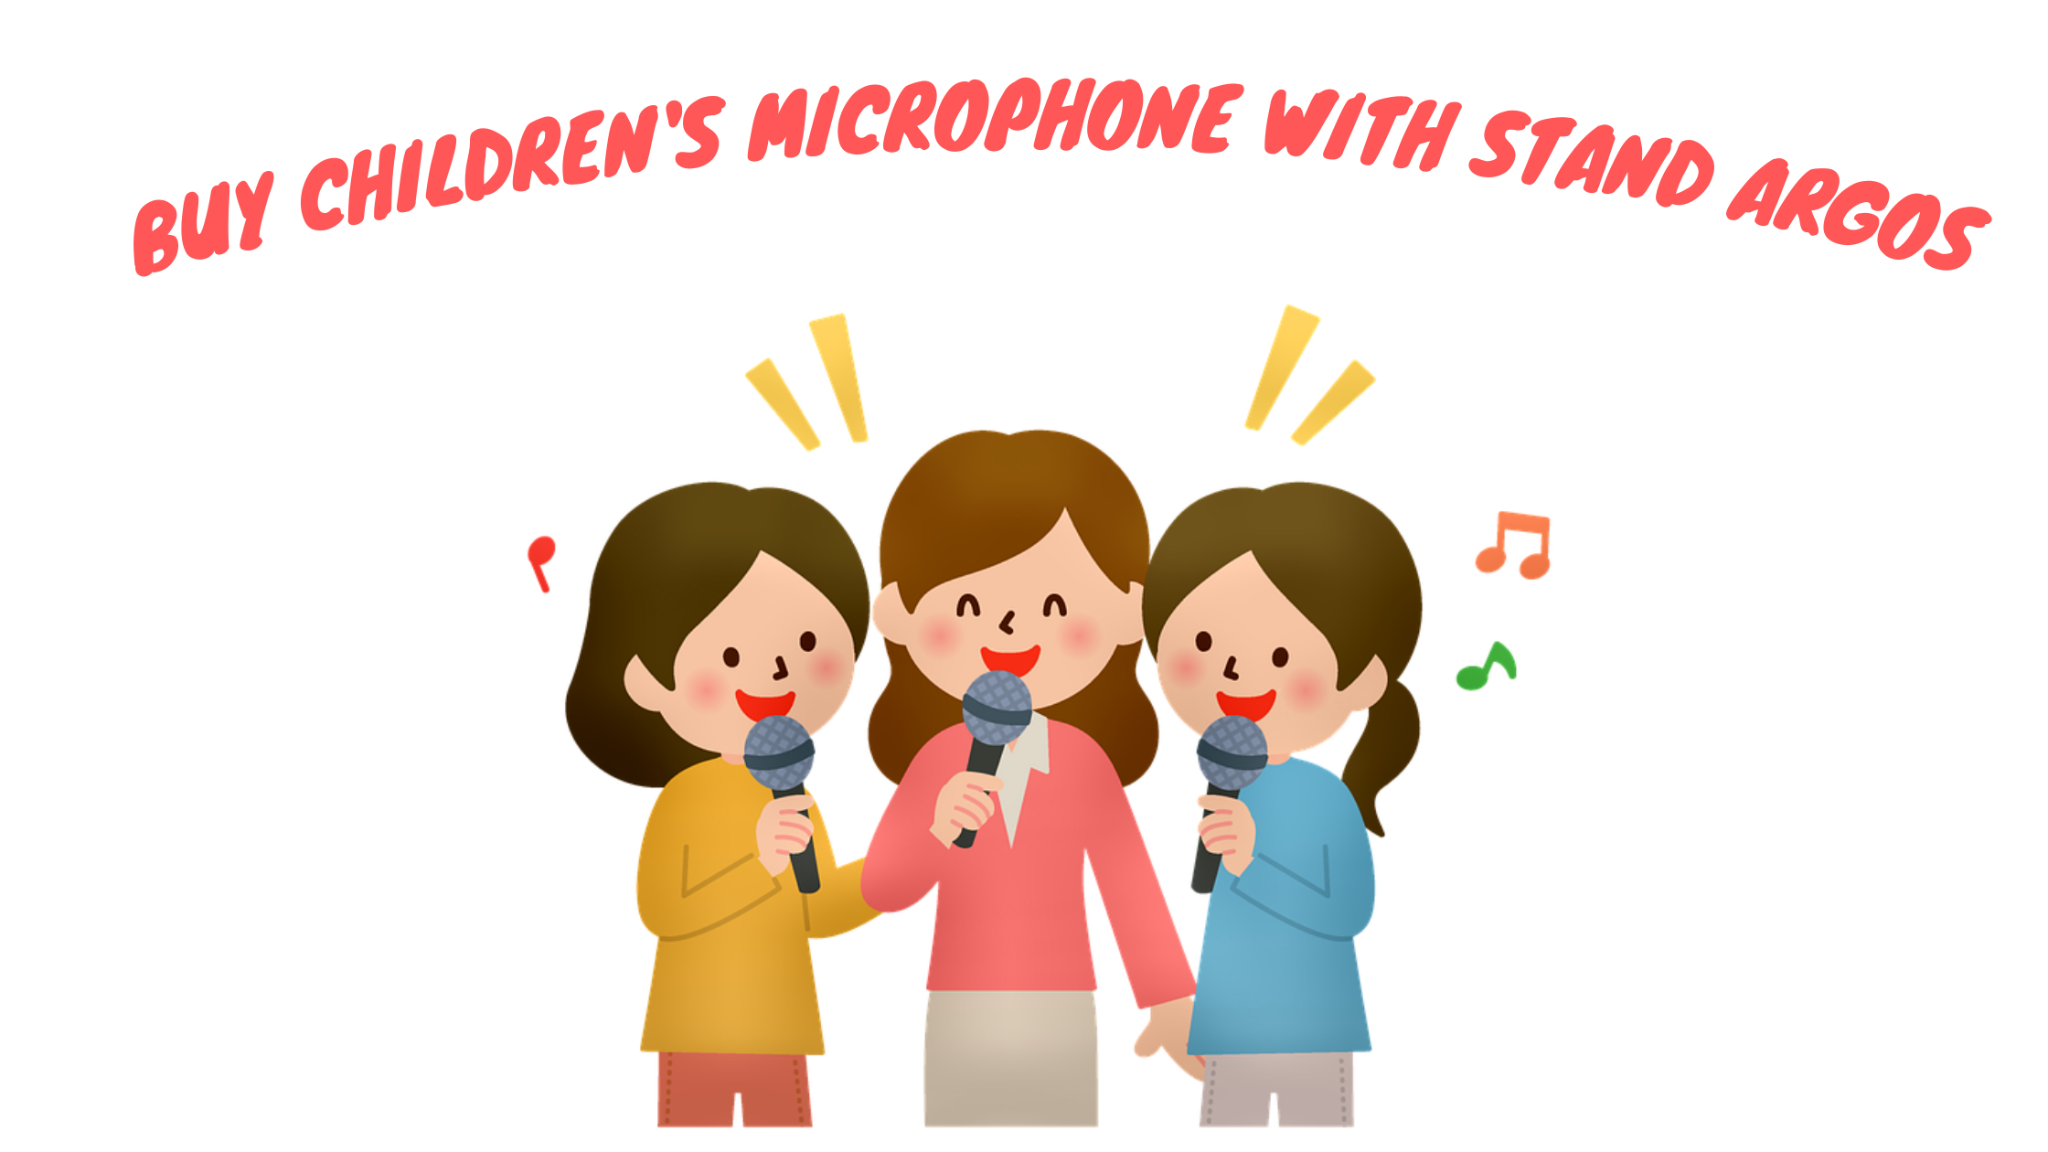 Kindermicrofoon met standaard kopen Argos